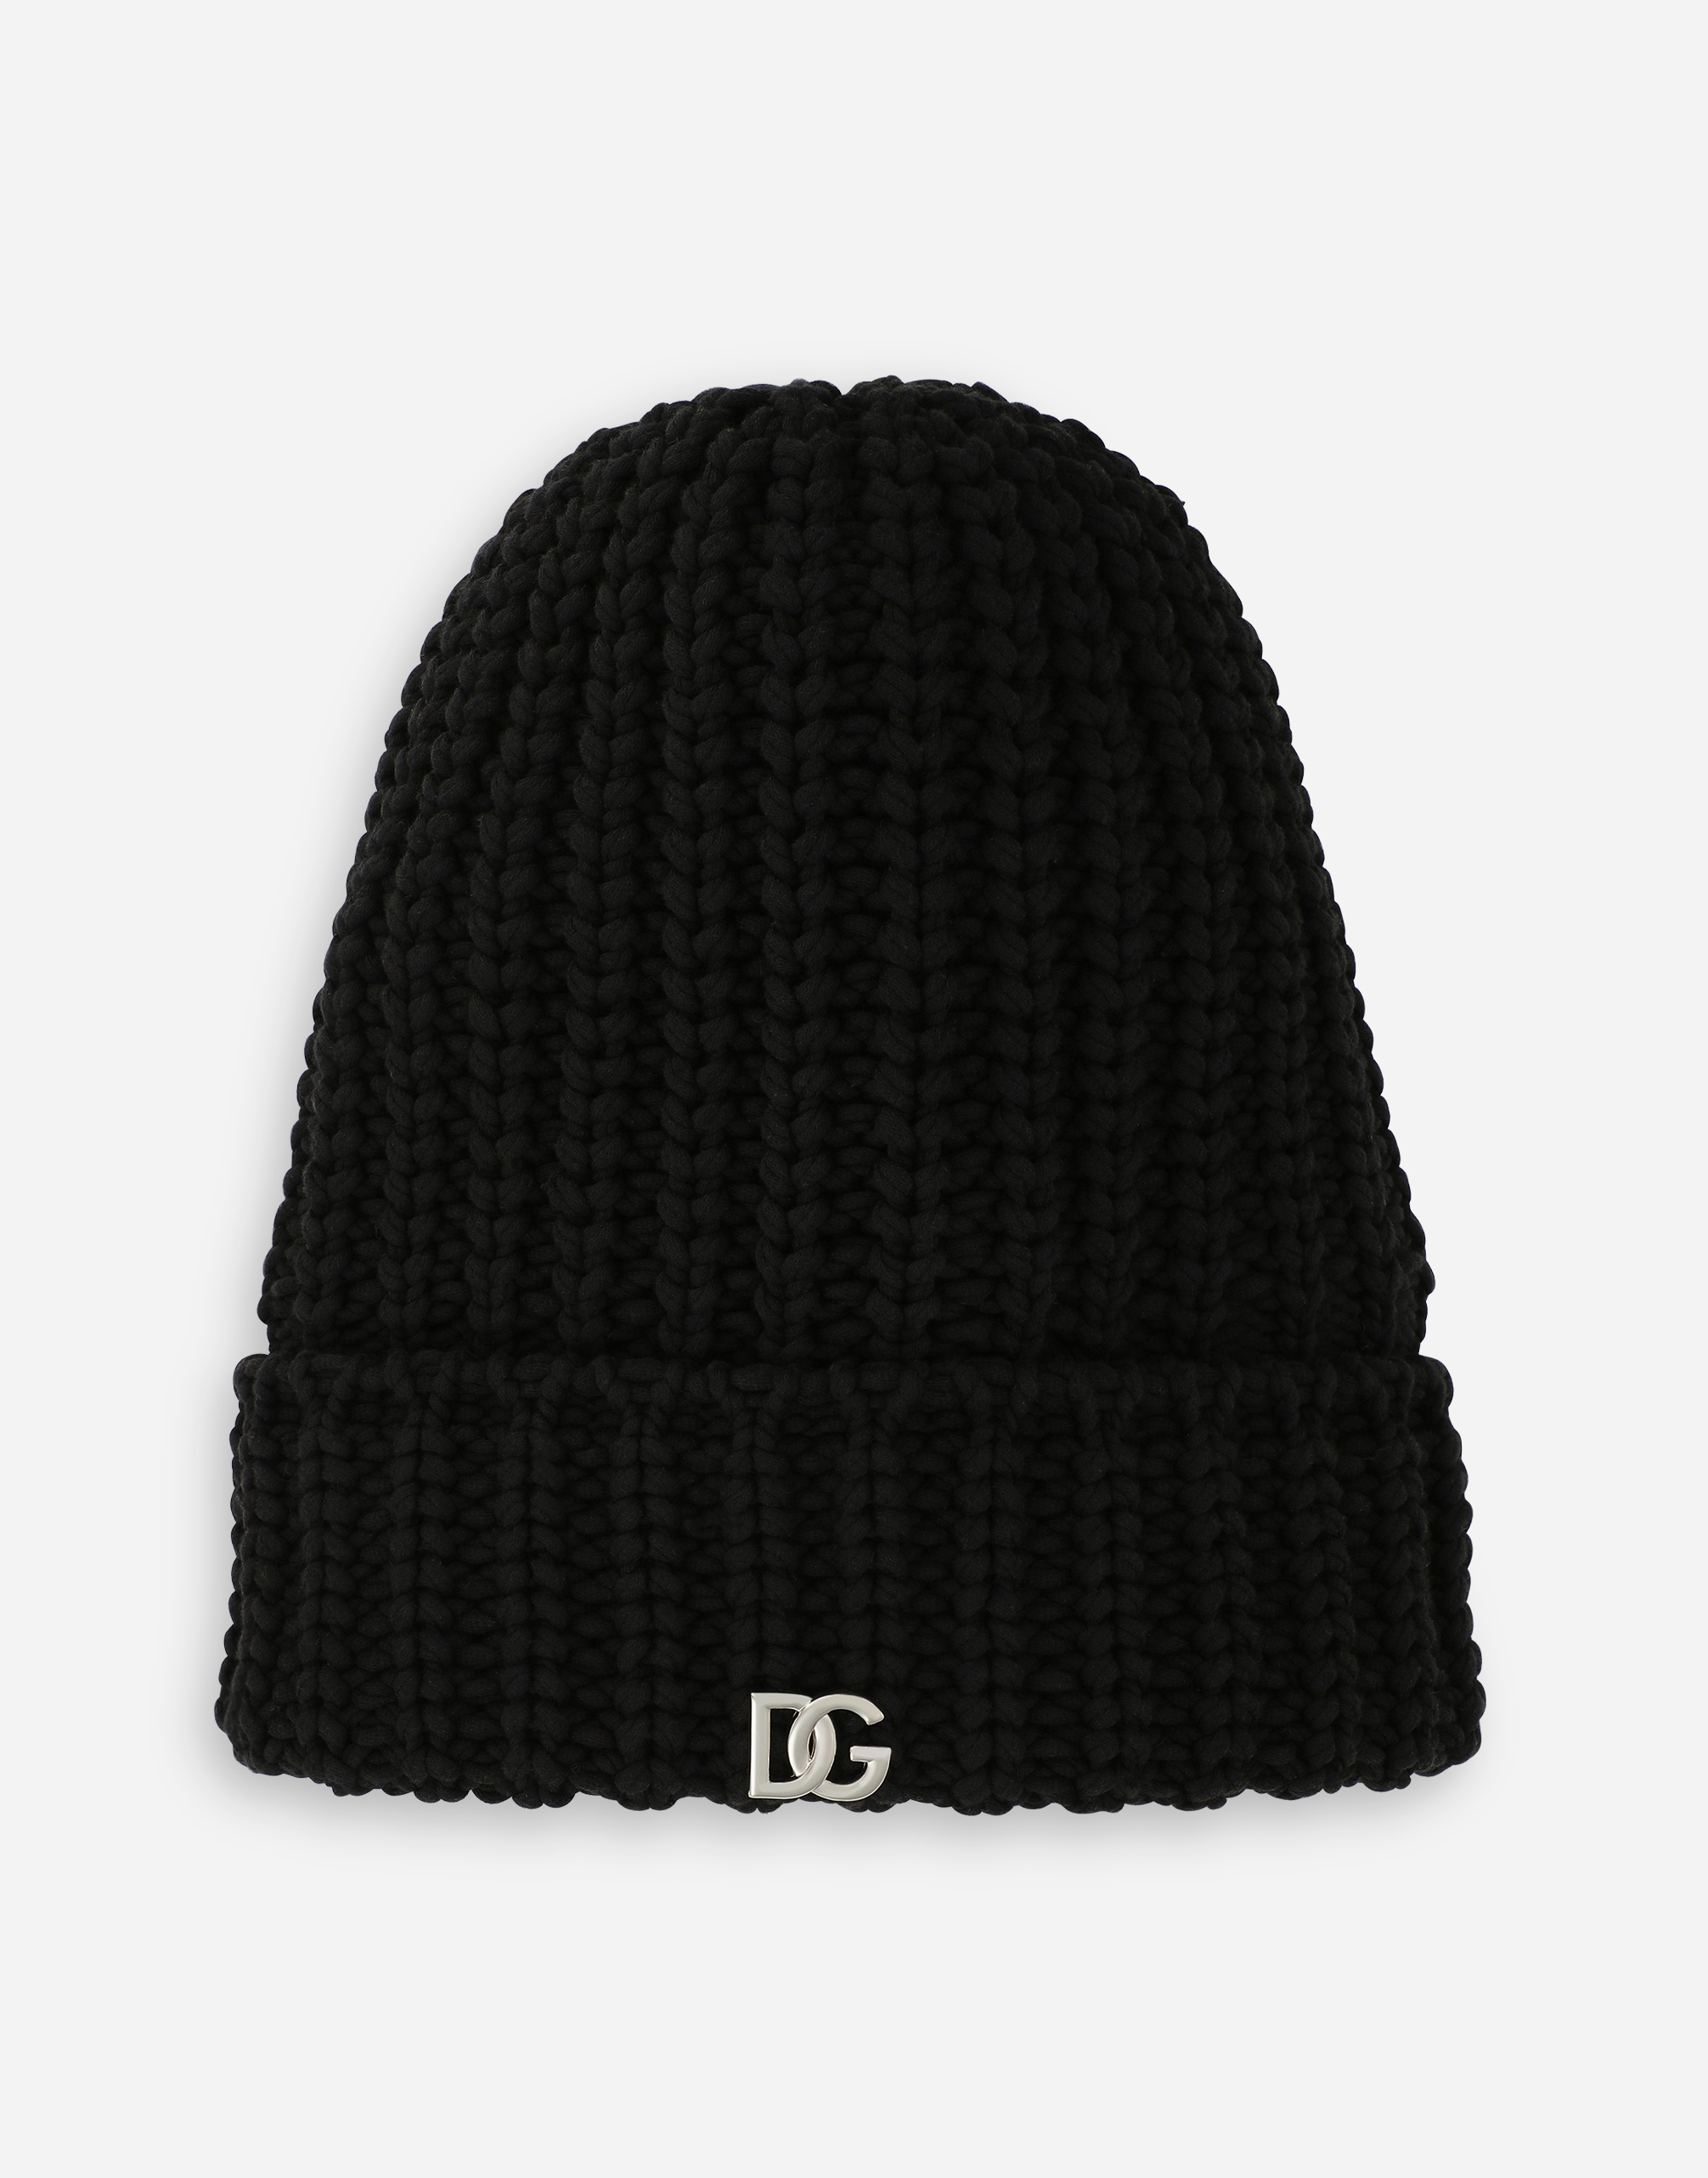 Cotton hat with DG logo in Black